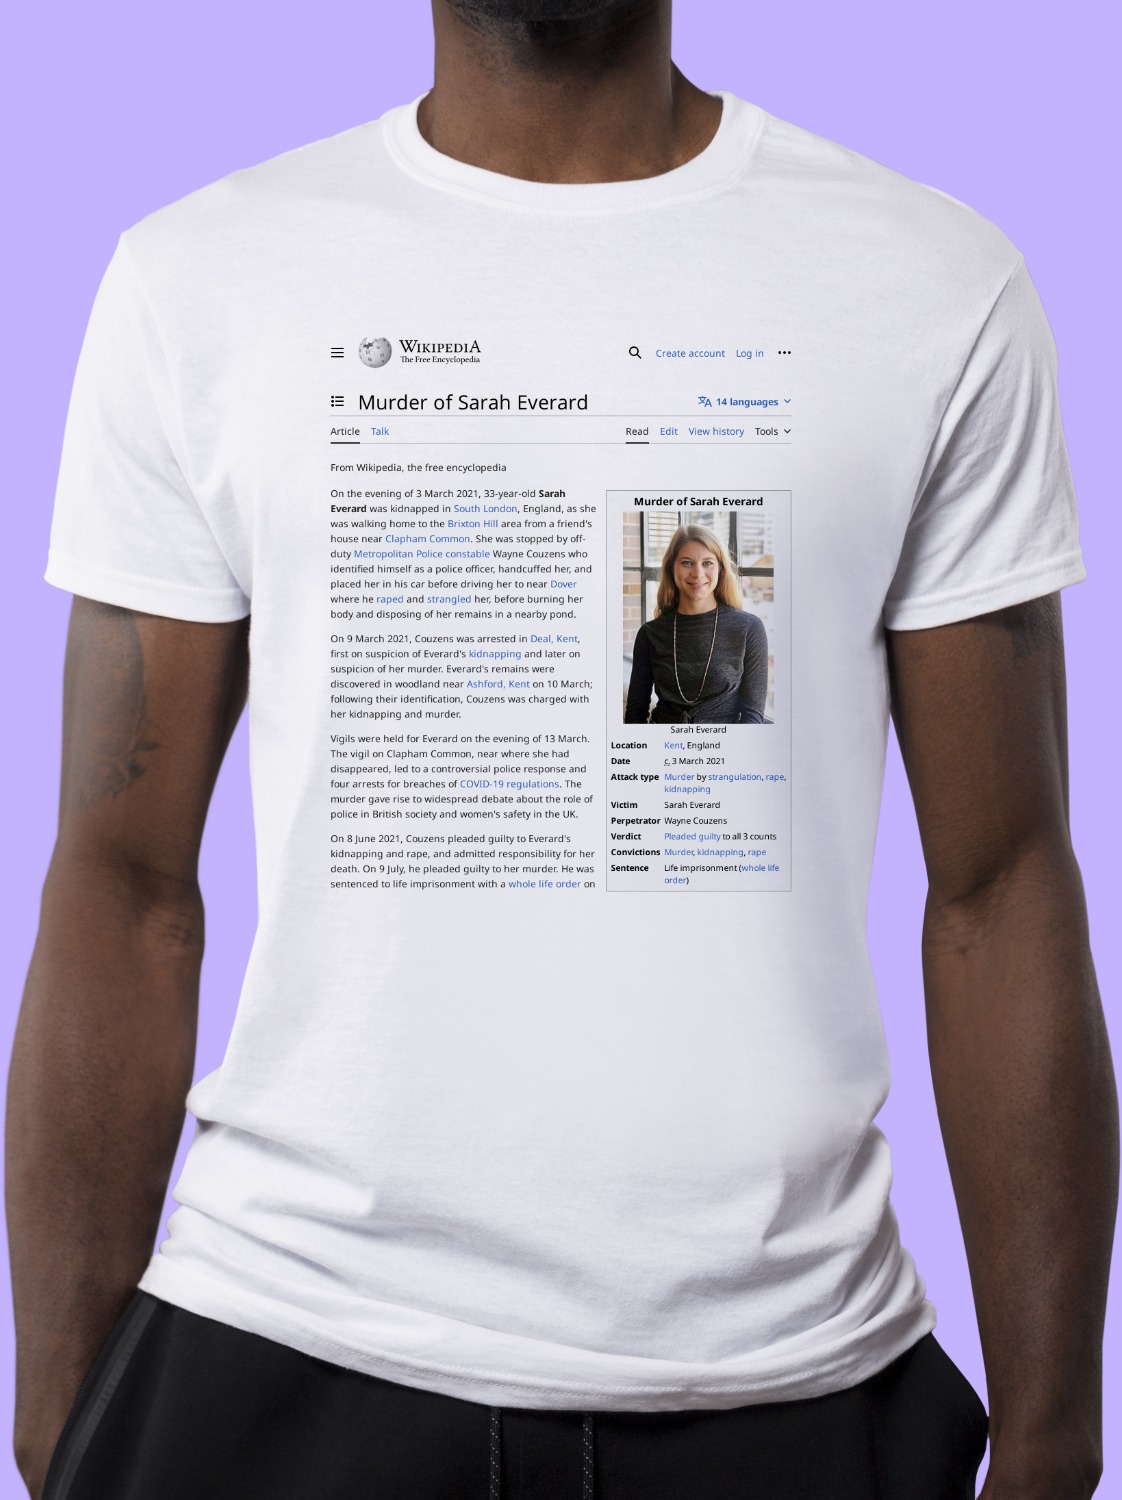 Death_of_Sarah_Everard Wikipedia Shirt